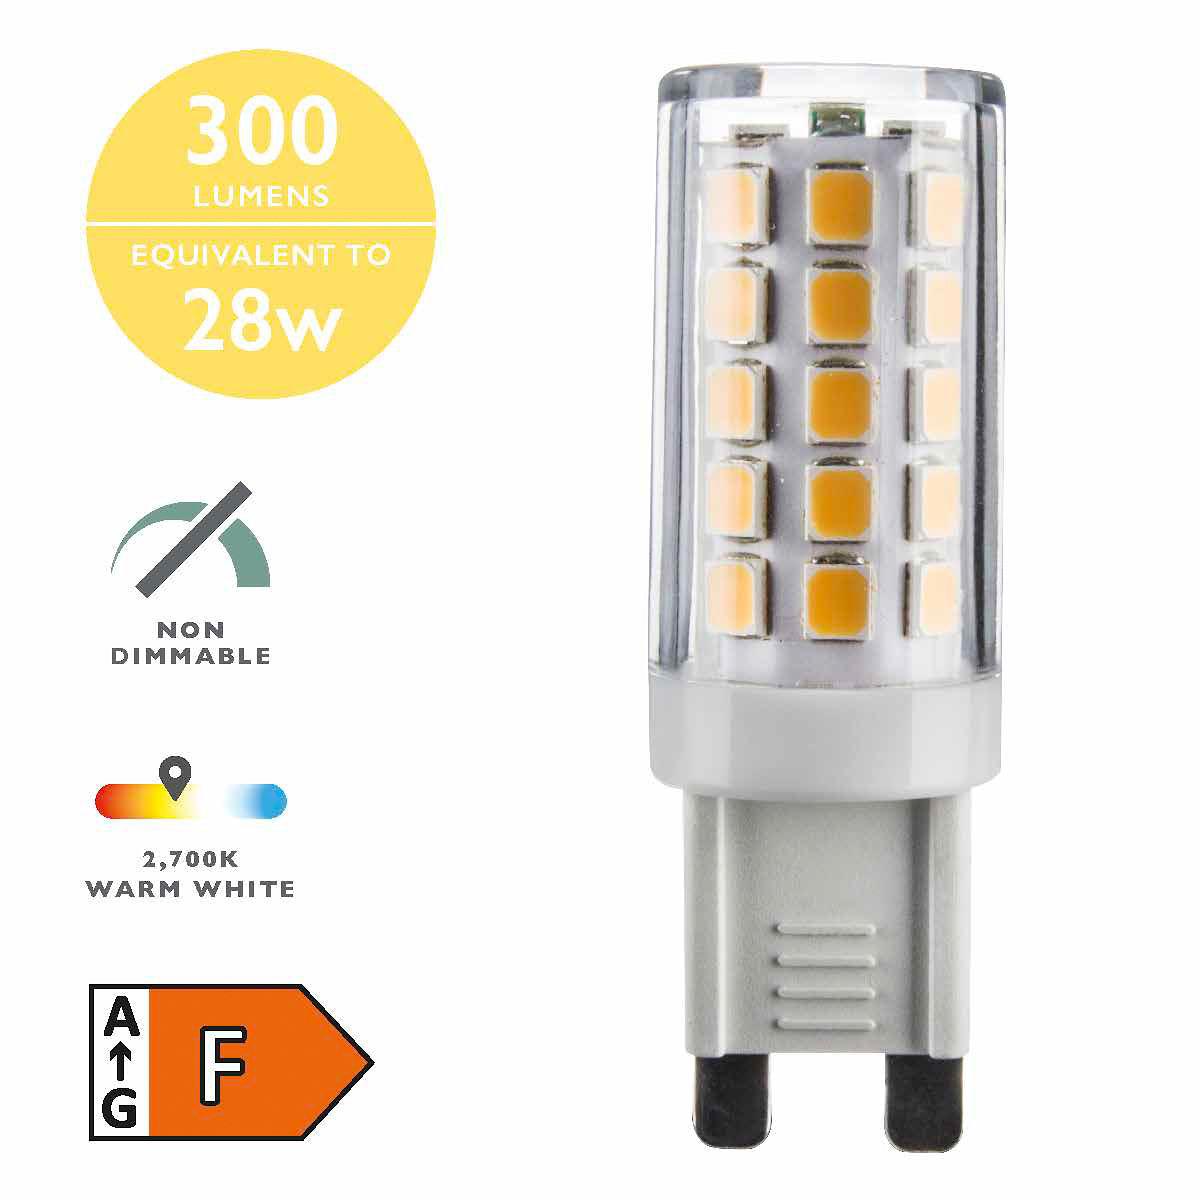 ontwerper Oorzaak Stevenson G9 LED LAMP 3W 300LM 2700K CLEARPeter Murphy Lighting & Electrical